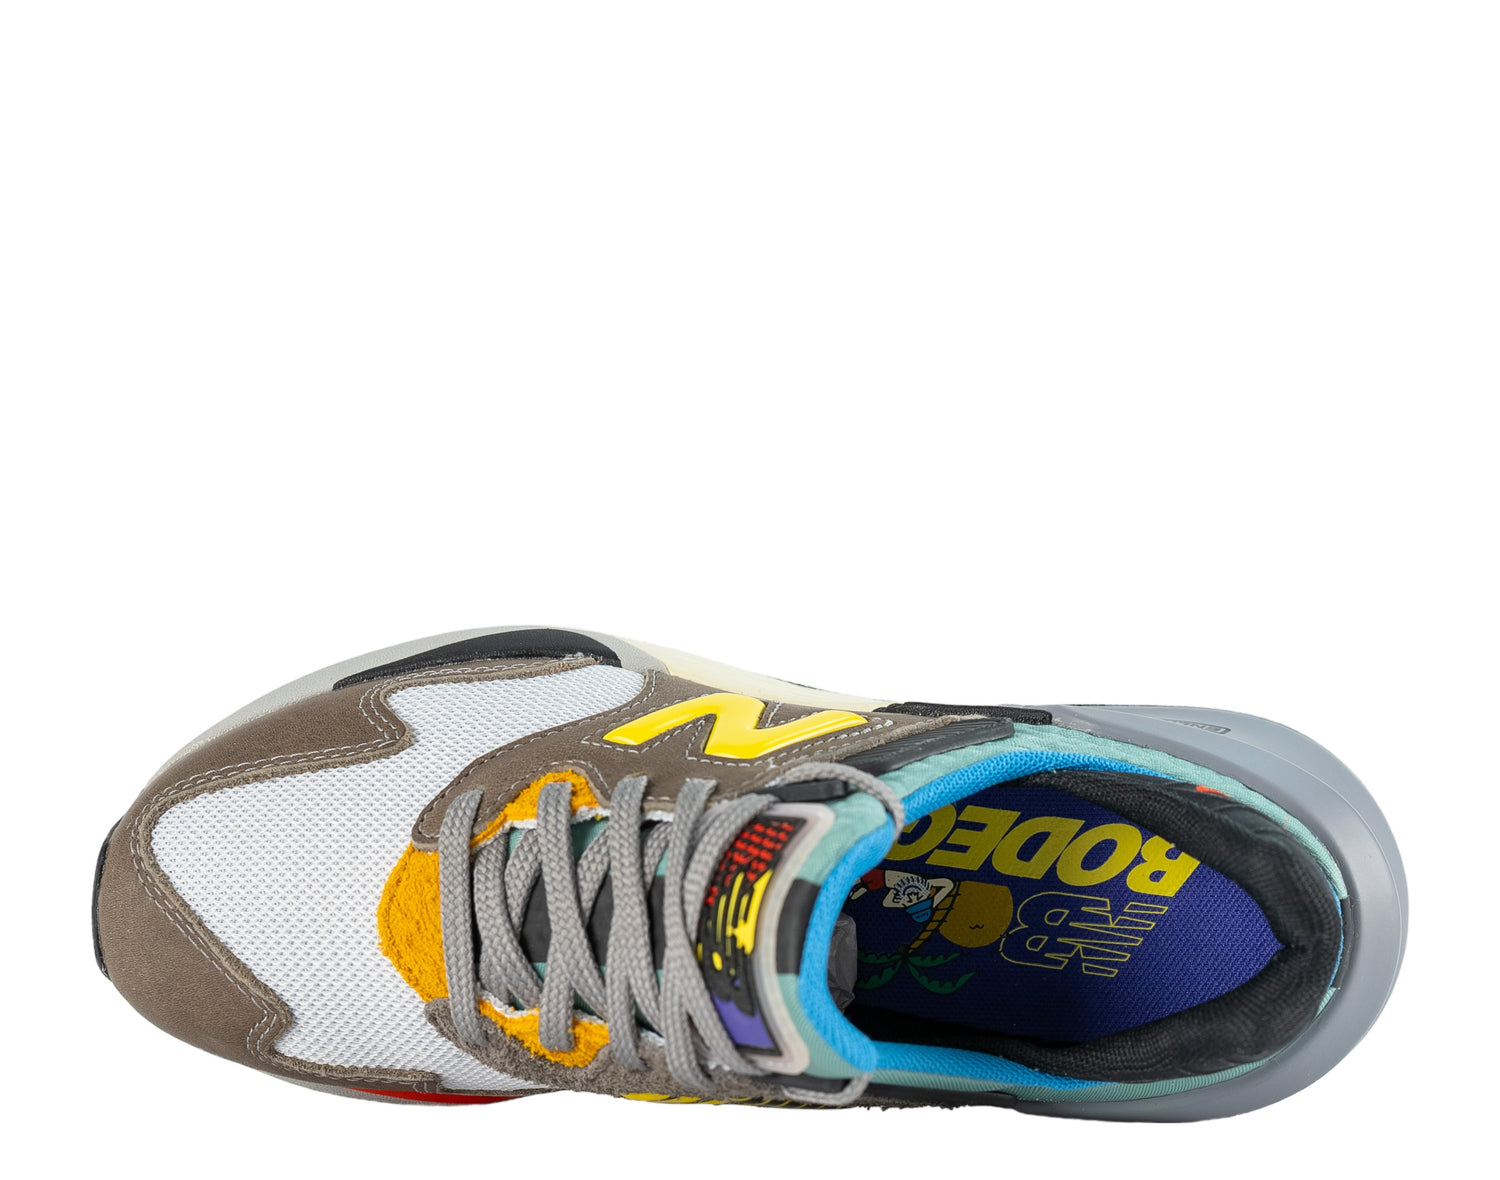 New Balance x Bodega MS997 Men's Running Shoes